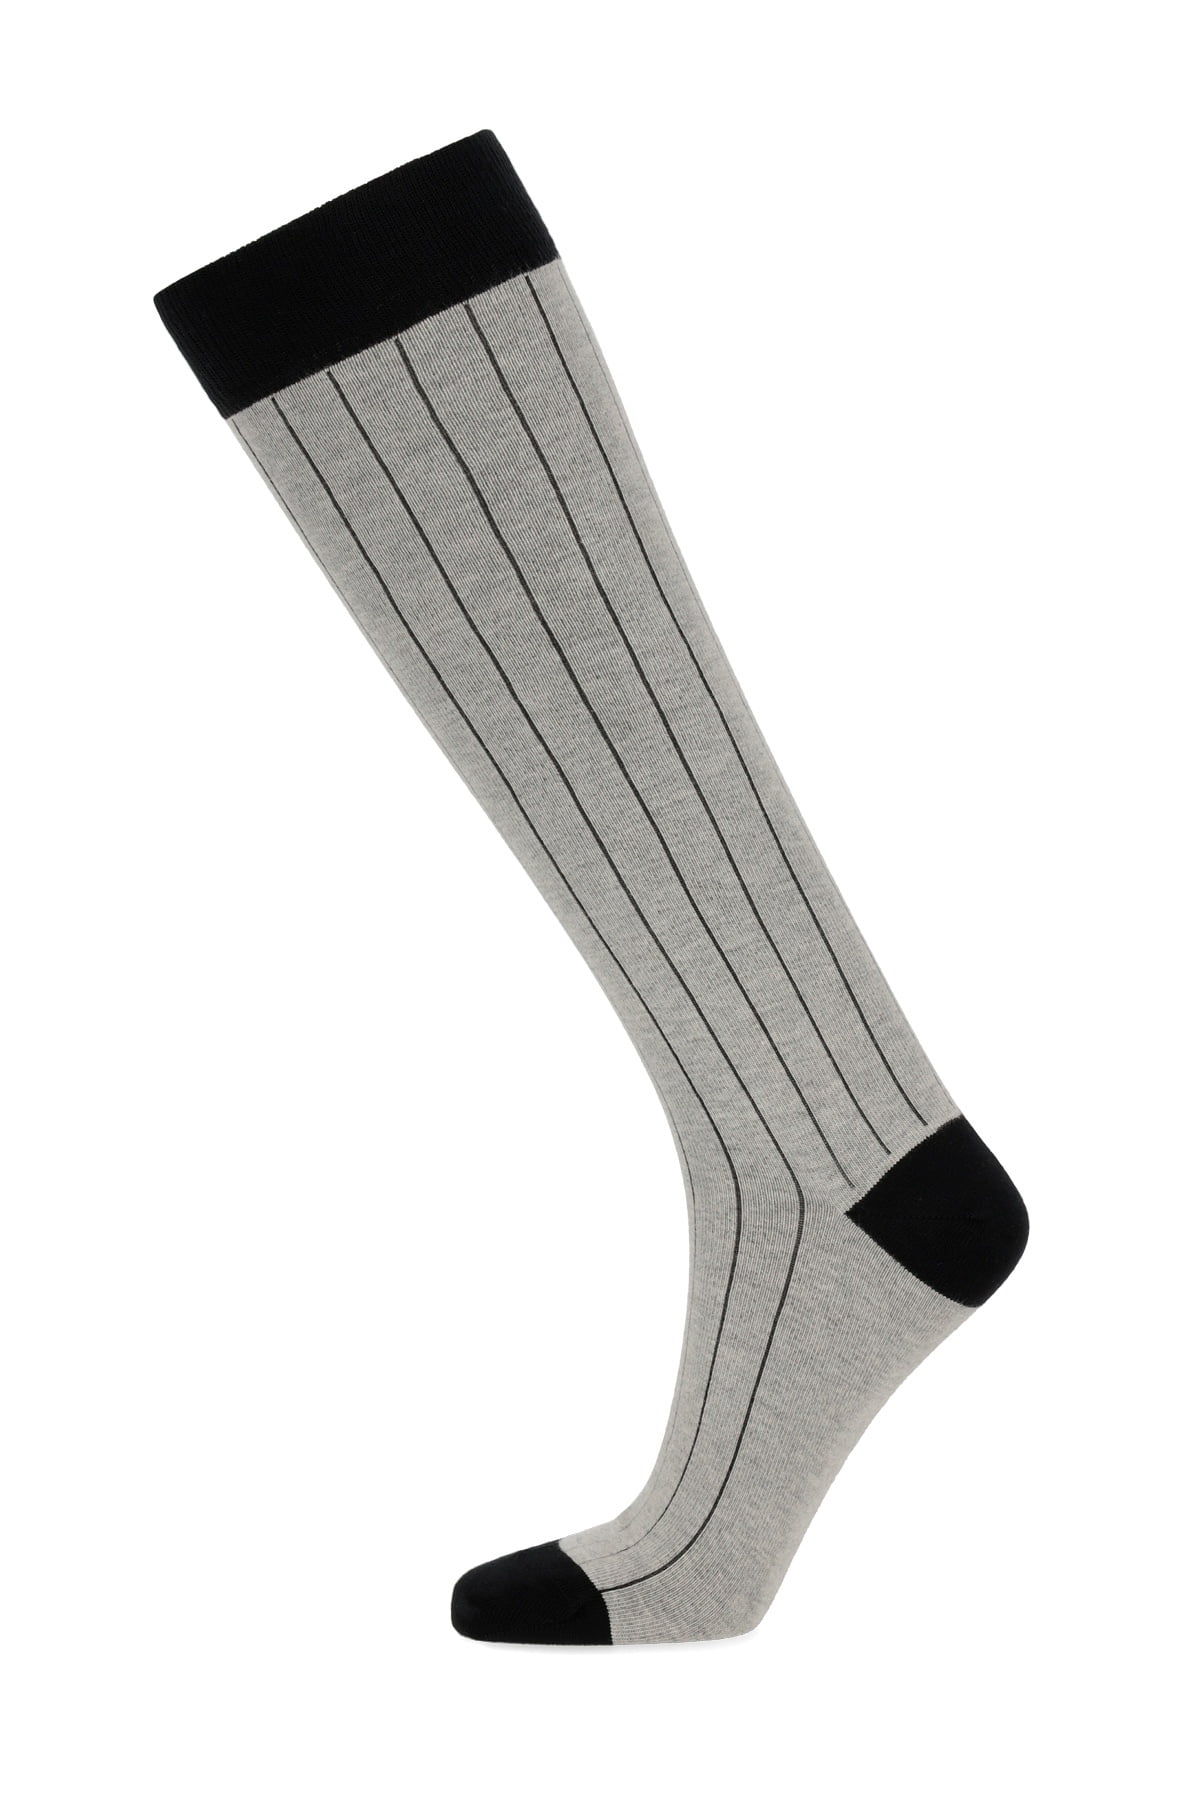 Calcetines CASA CALCEA Gris canalé negro altos - Socks Market - 10,30€